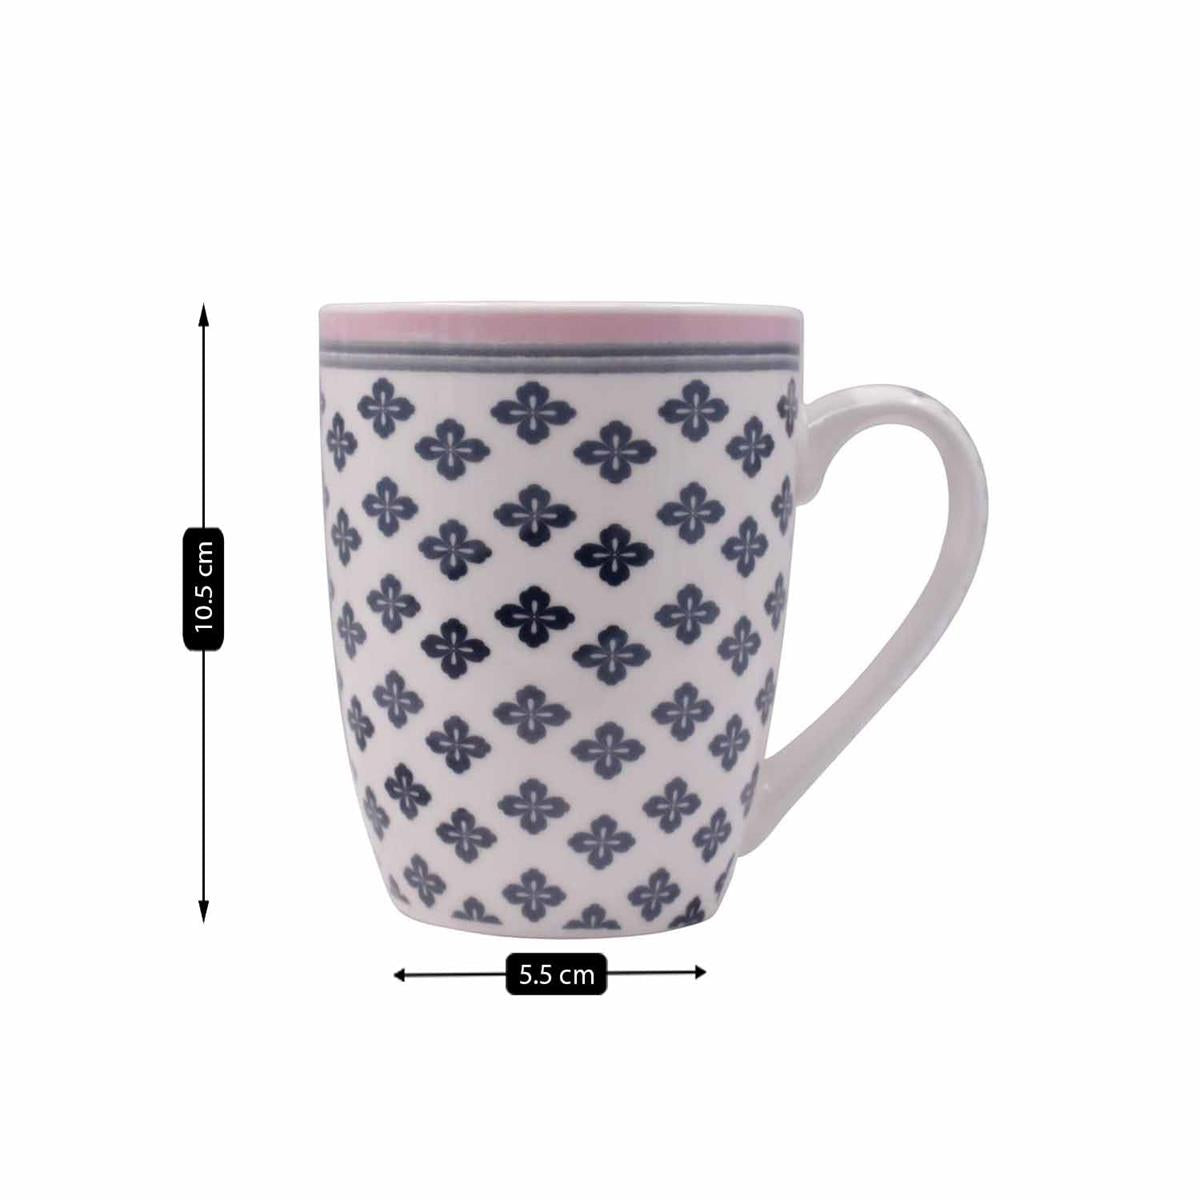 Printed Ceramic Coffee or Tea Mug with handle - 325ml (4124-A)